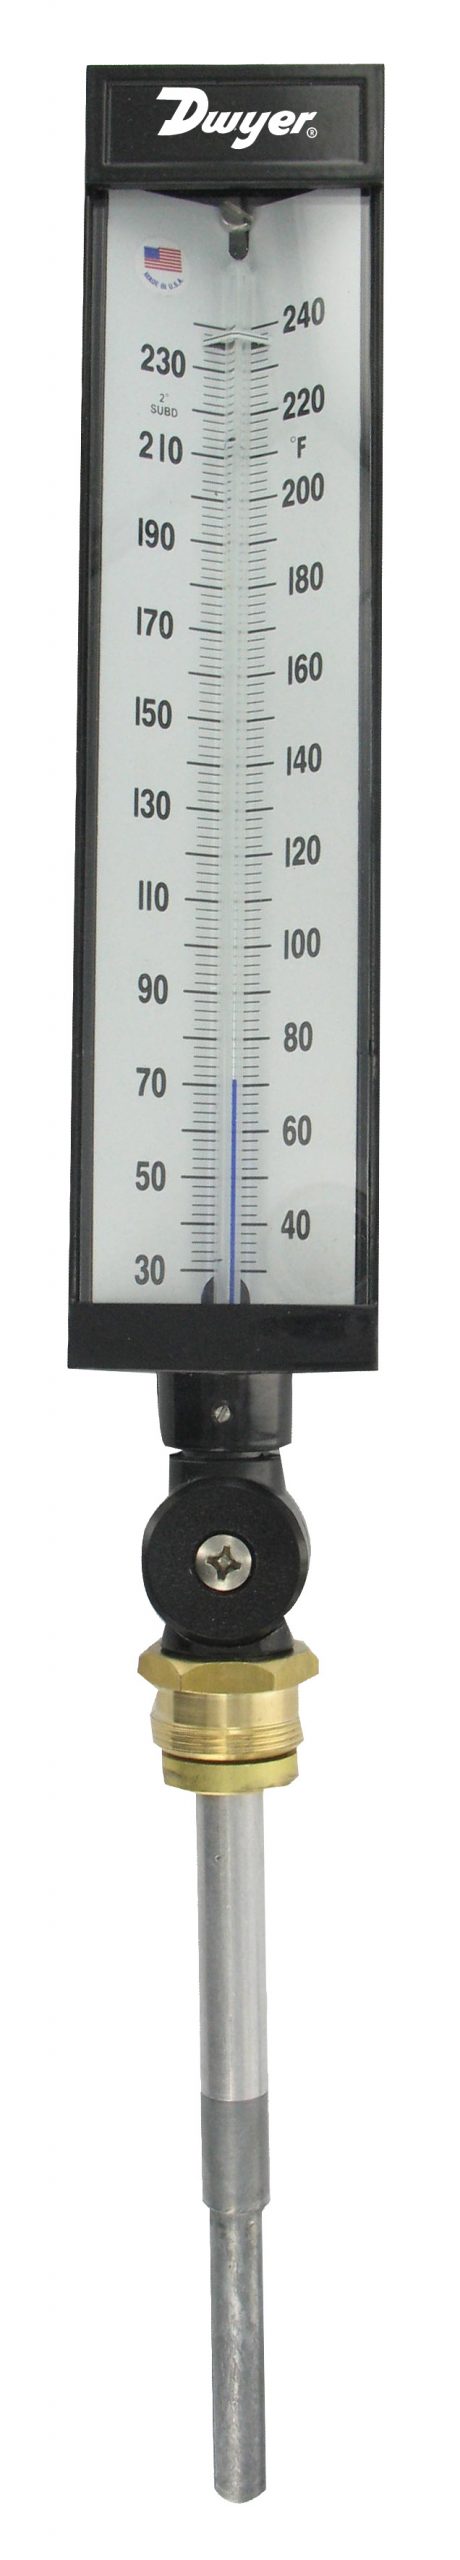 Промышленный термометр От -40 до 300°С Dwyer IT